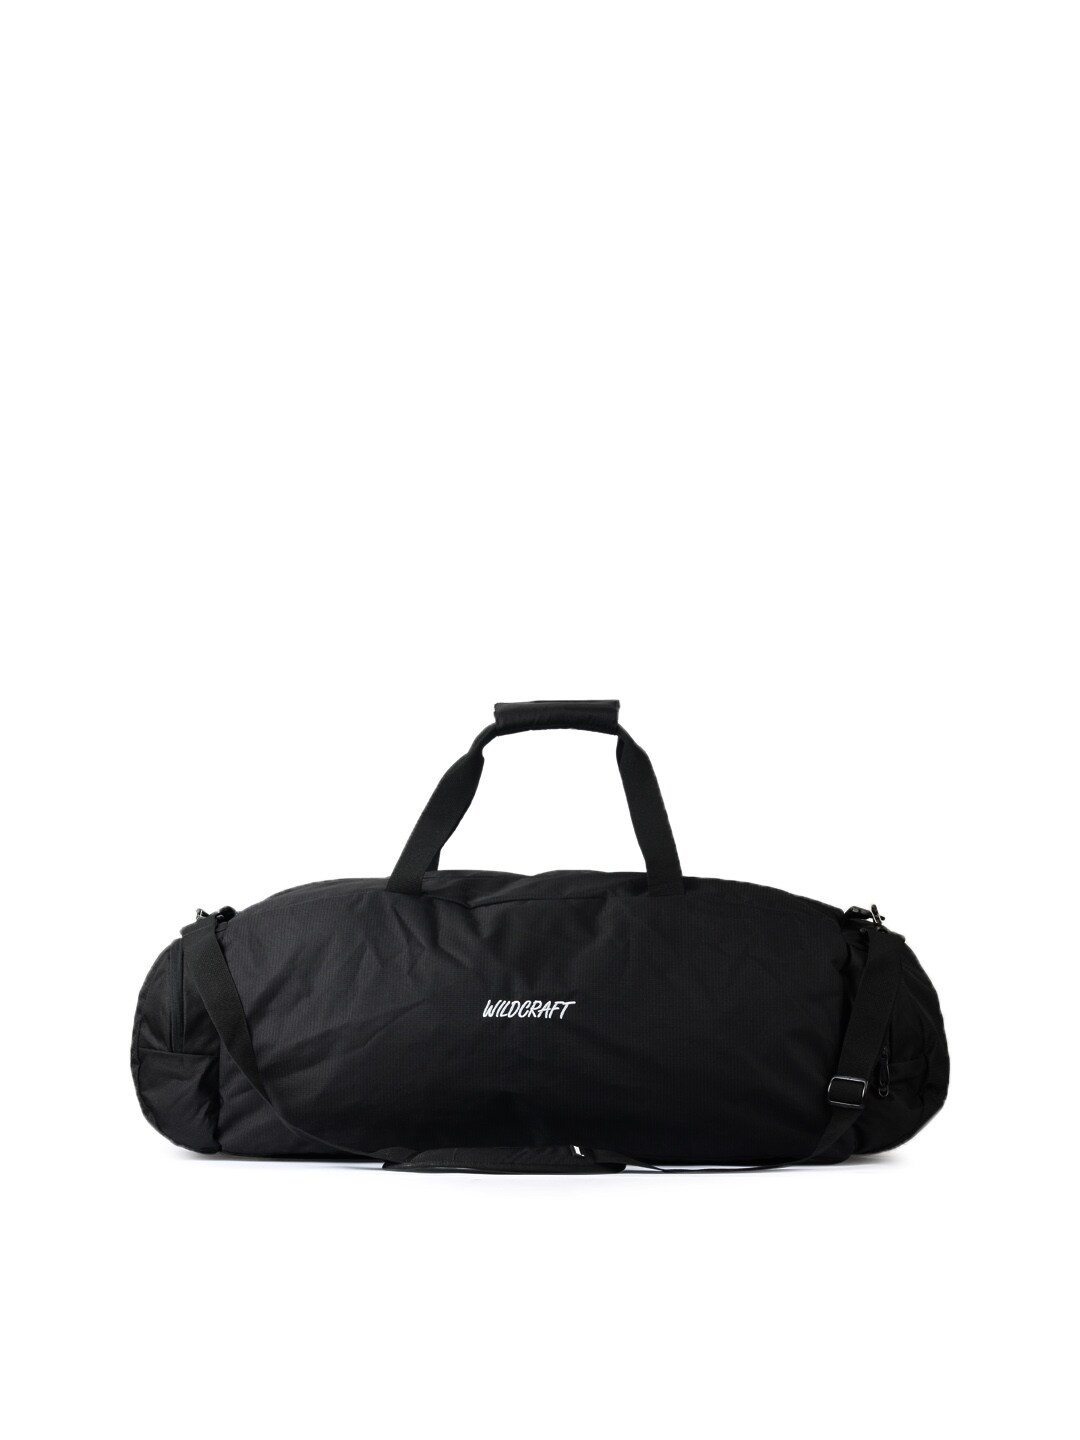 Wildcraft Unisex Black Duffel Bag